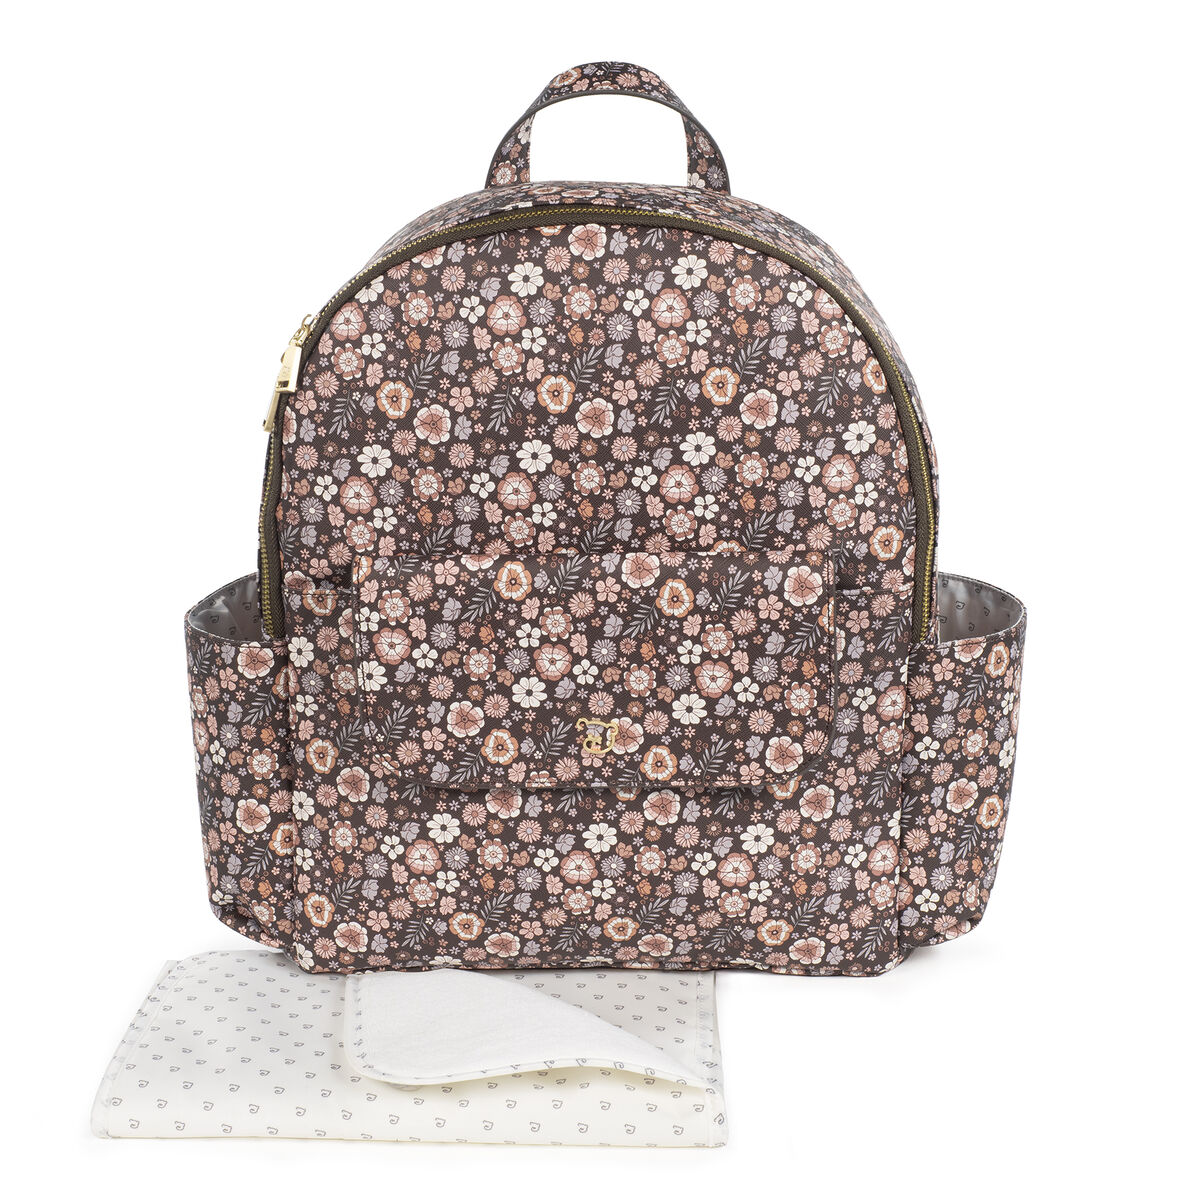 Pasito a Pasito Blossom Petal Backpack